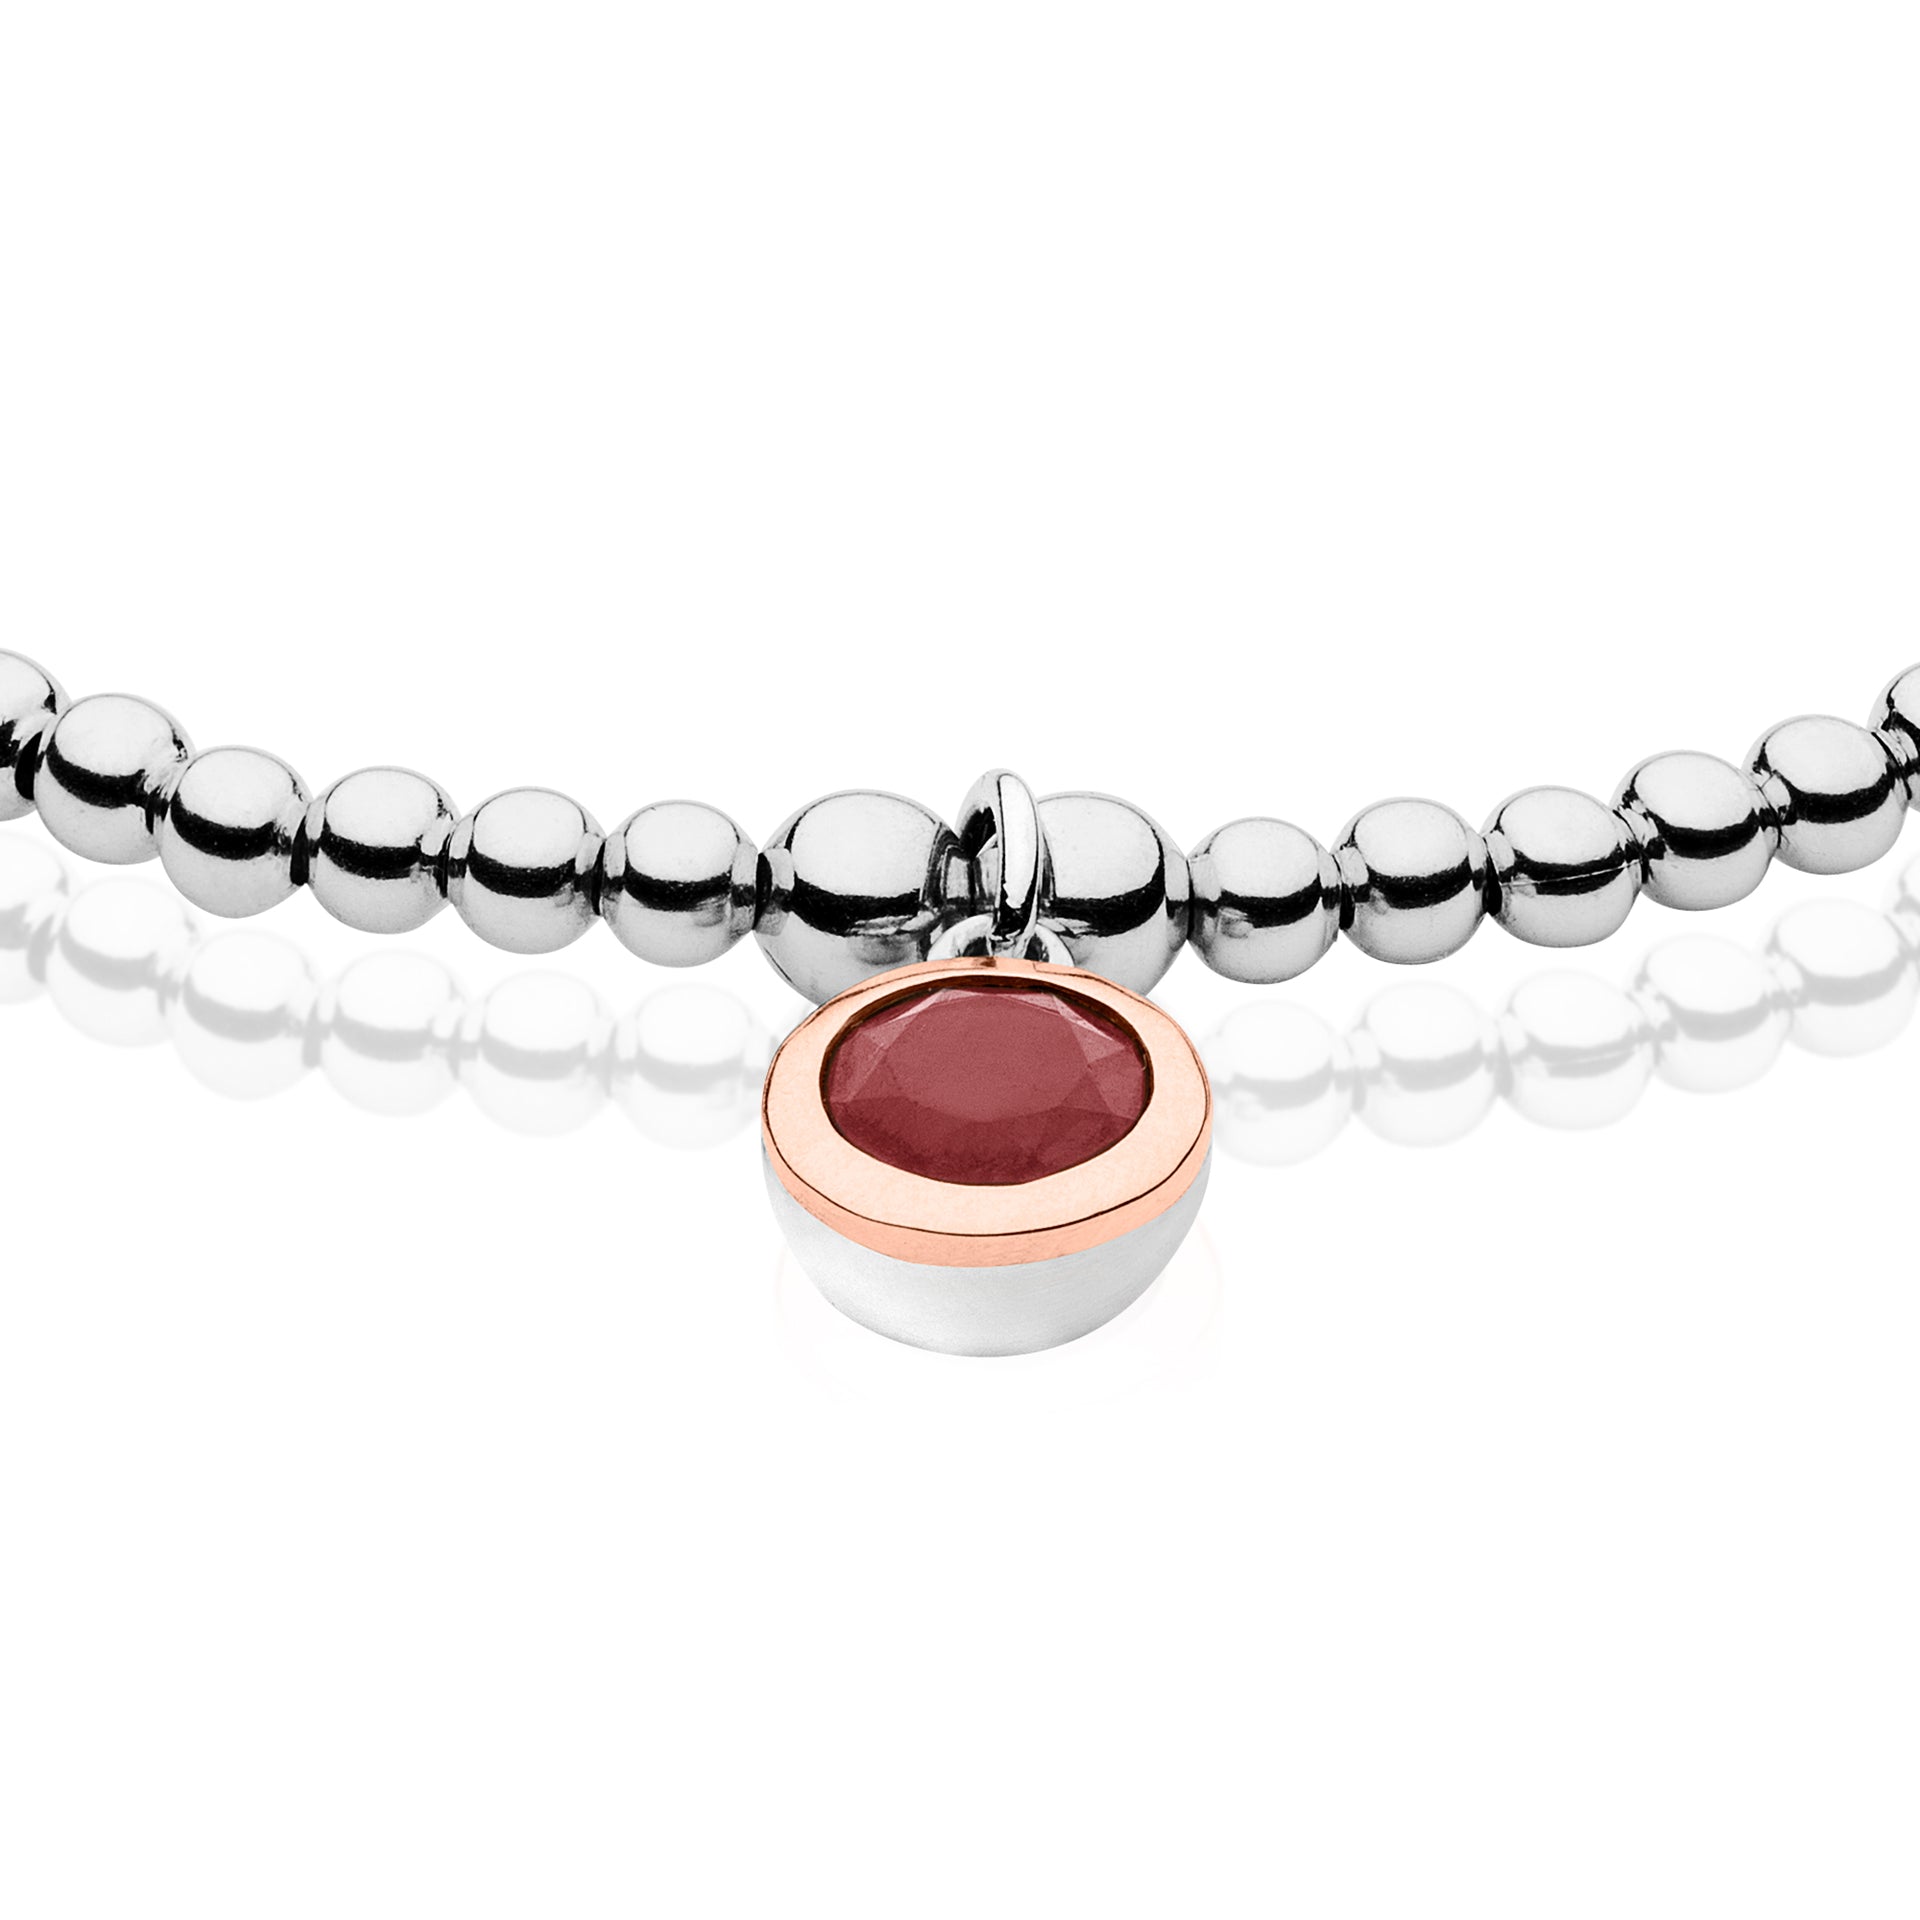 Birthstone Silver and Garnet Affinity Bracelet – January